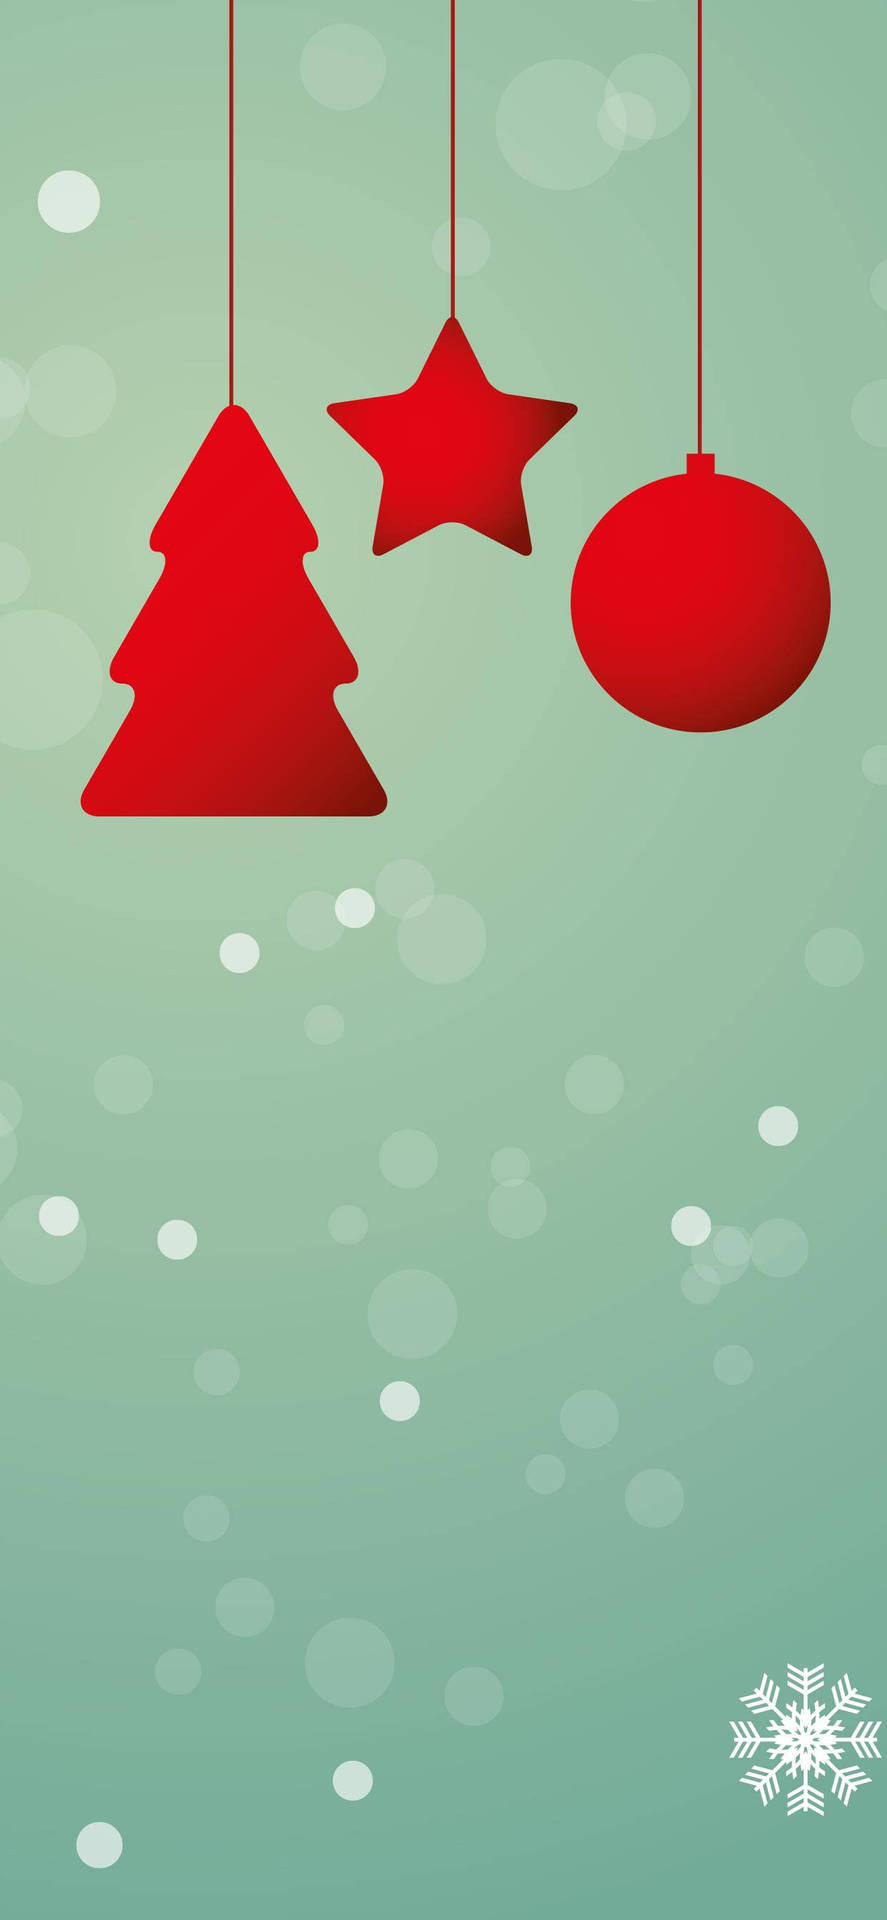 Hermososy Estéticos Fondos De Pantalla De Navidad Para Iphone. Fondo de pantalla